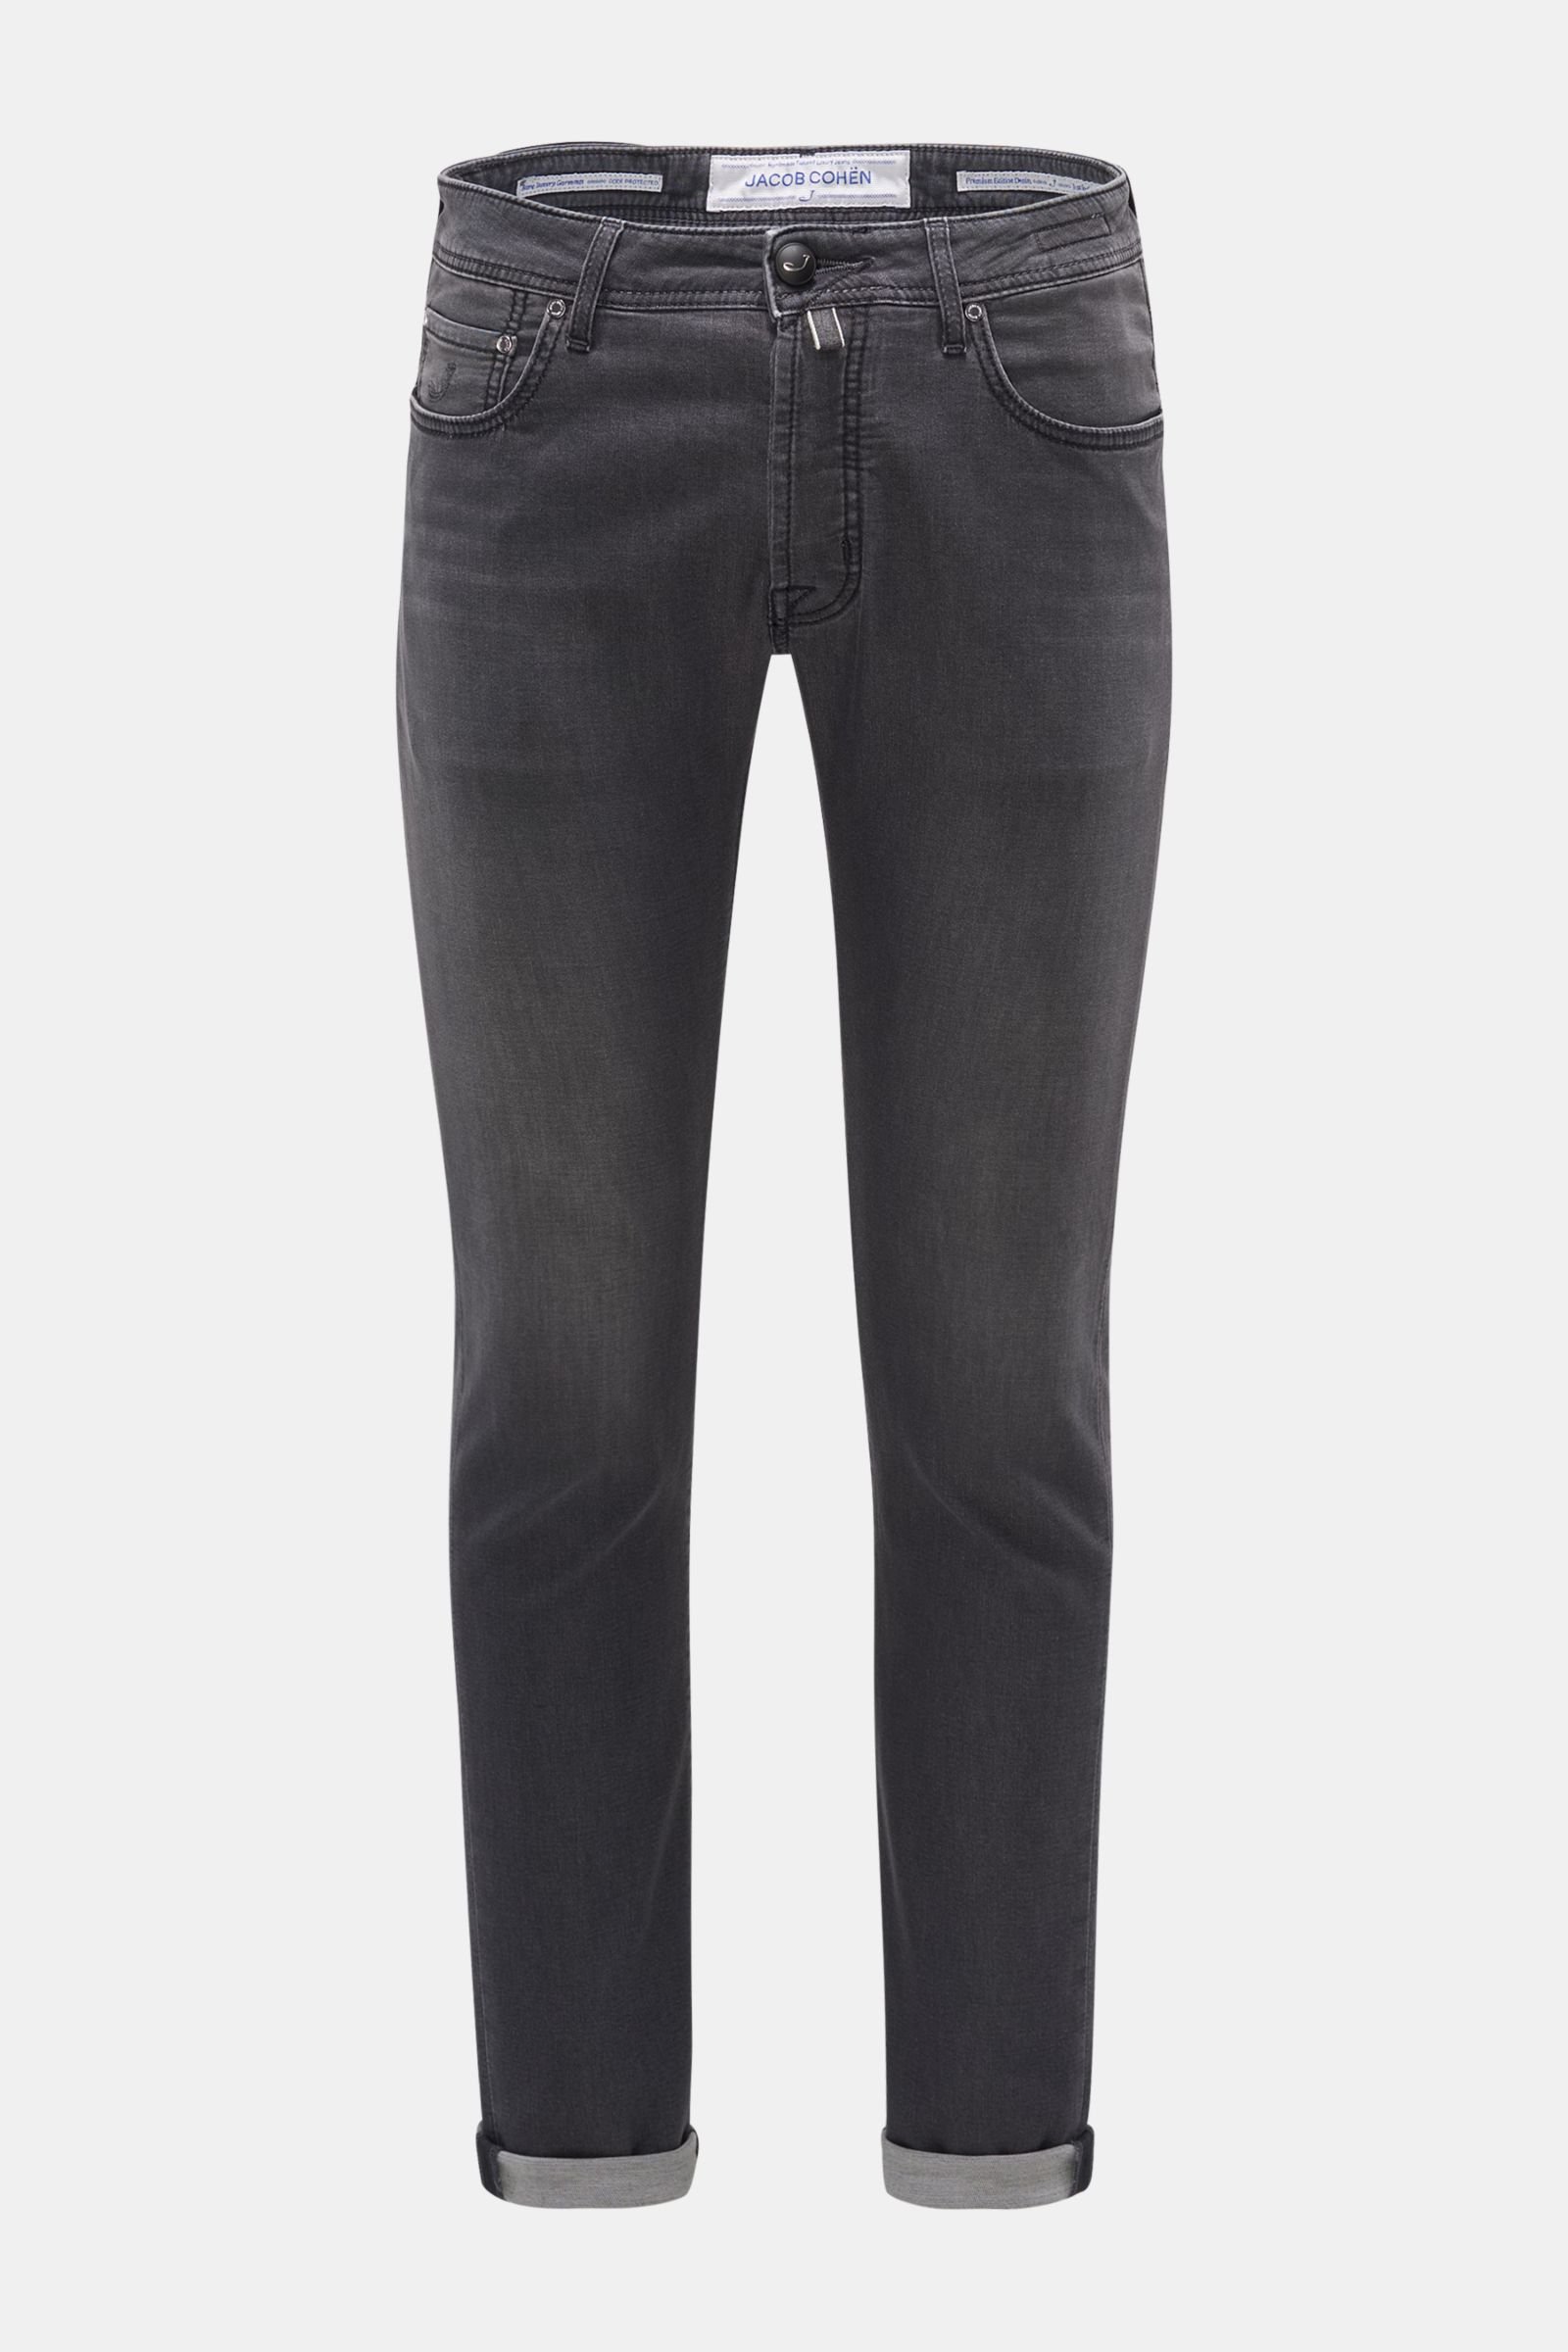 Jeans 'J688 Comfort Slim Fit' dark grey